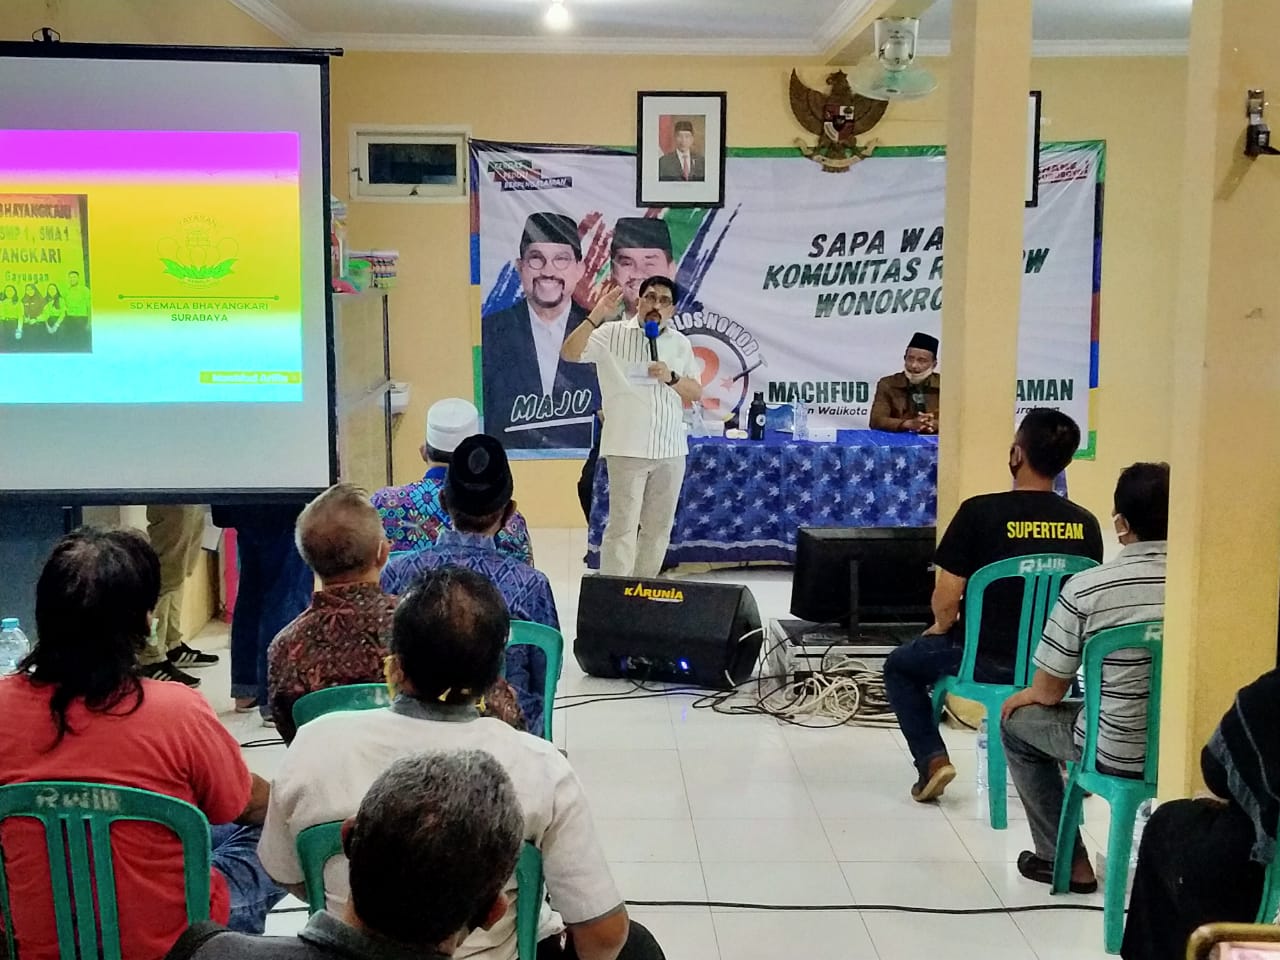 Calon Walikota (cawali) Surabaya, Machfud Arifin (MA) menyampaikan programnya dalam kampanyenya di Jalan Karangrejo Sawah III, Surabaya, Jumat 2 Oktober 2020 malam. (Foto: Fariz Yarbo/Ngopibareng.id)